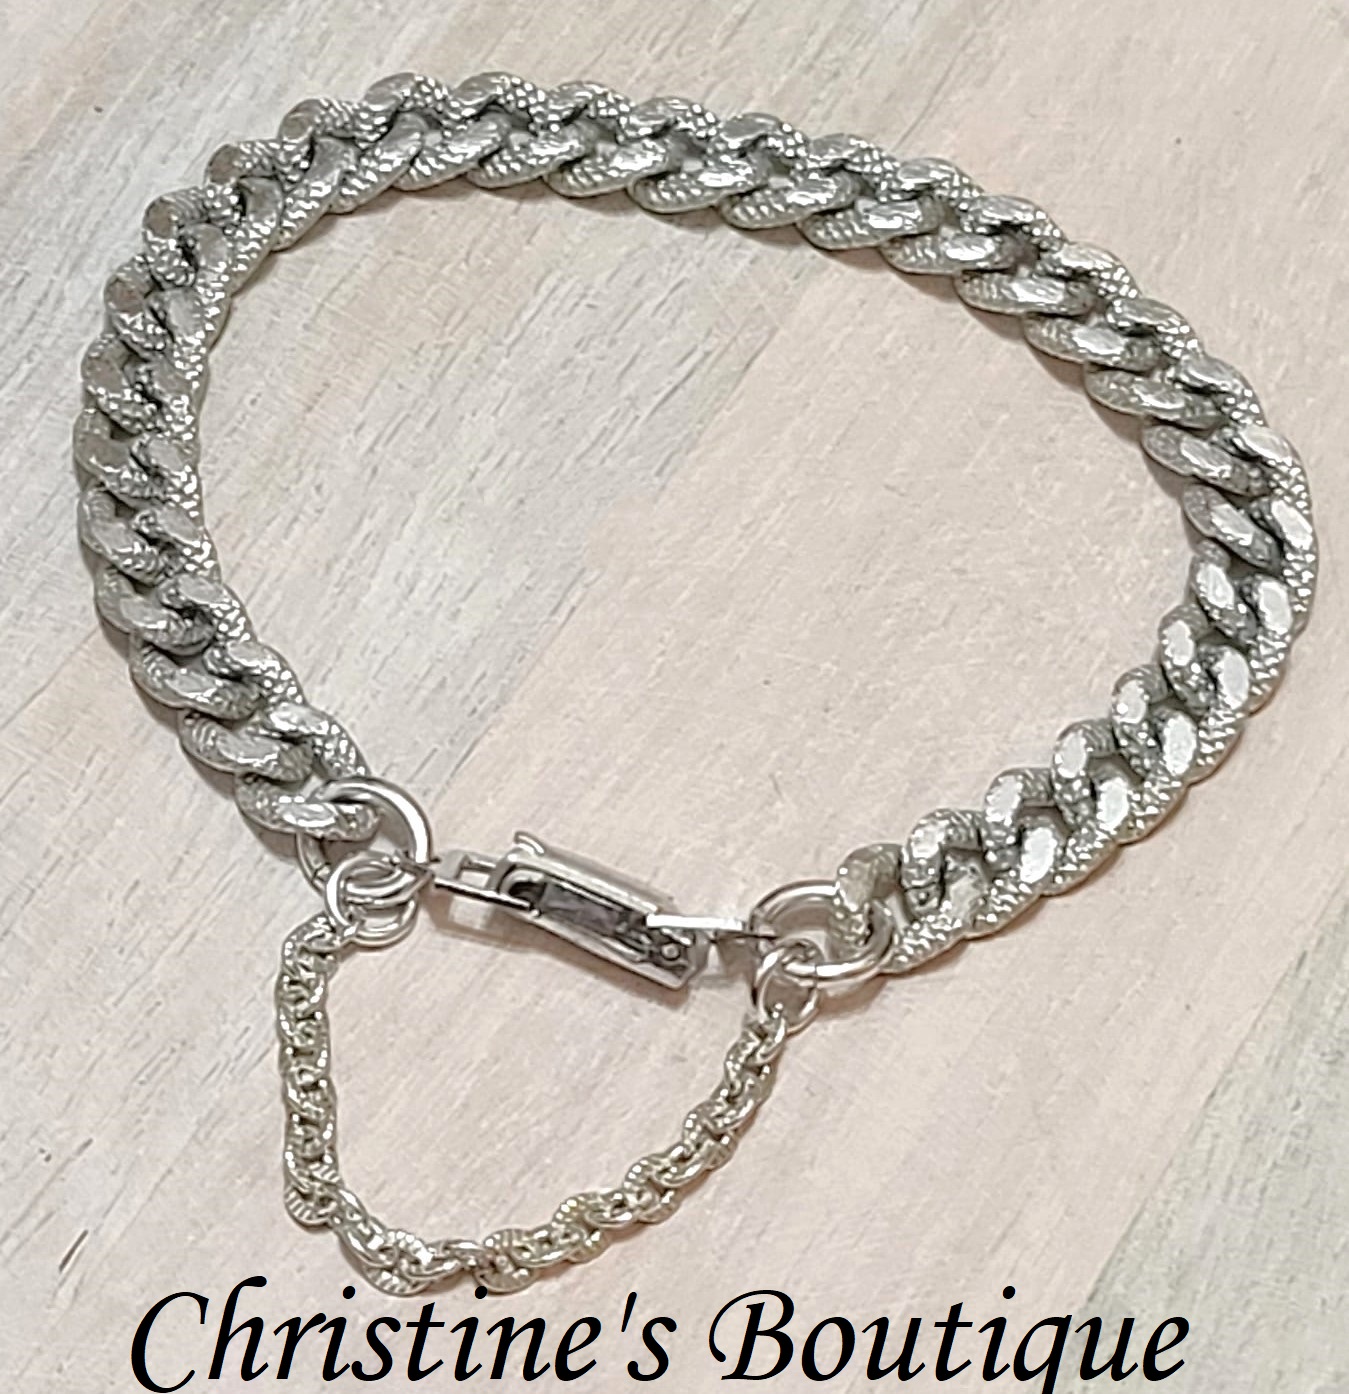 Vintage chain bracelete, silvertone, diamond cut, signed Germany